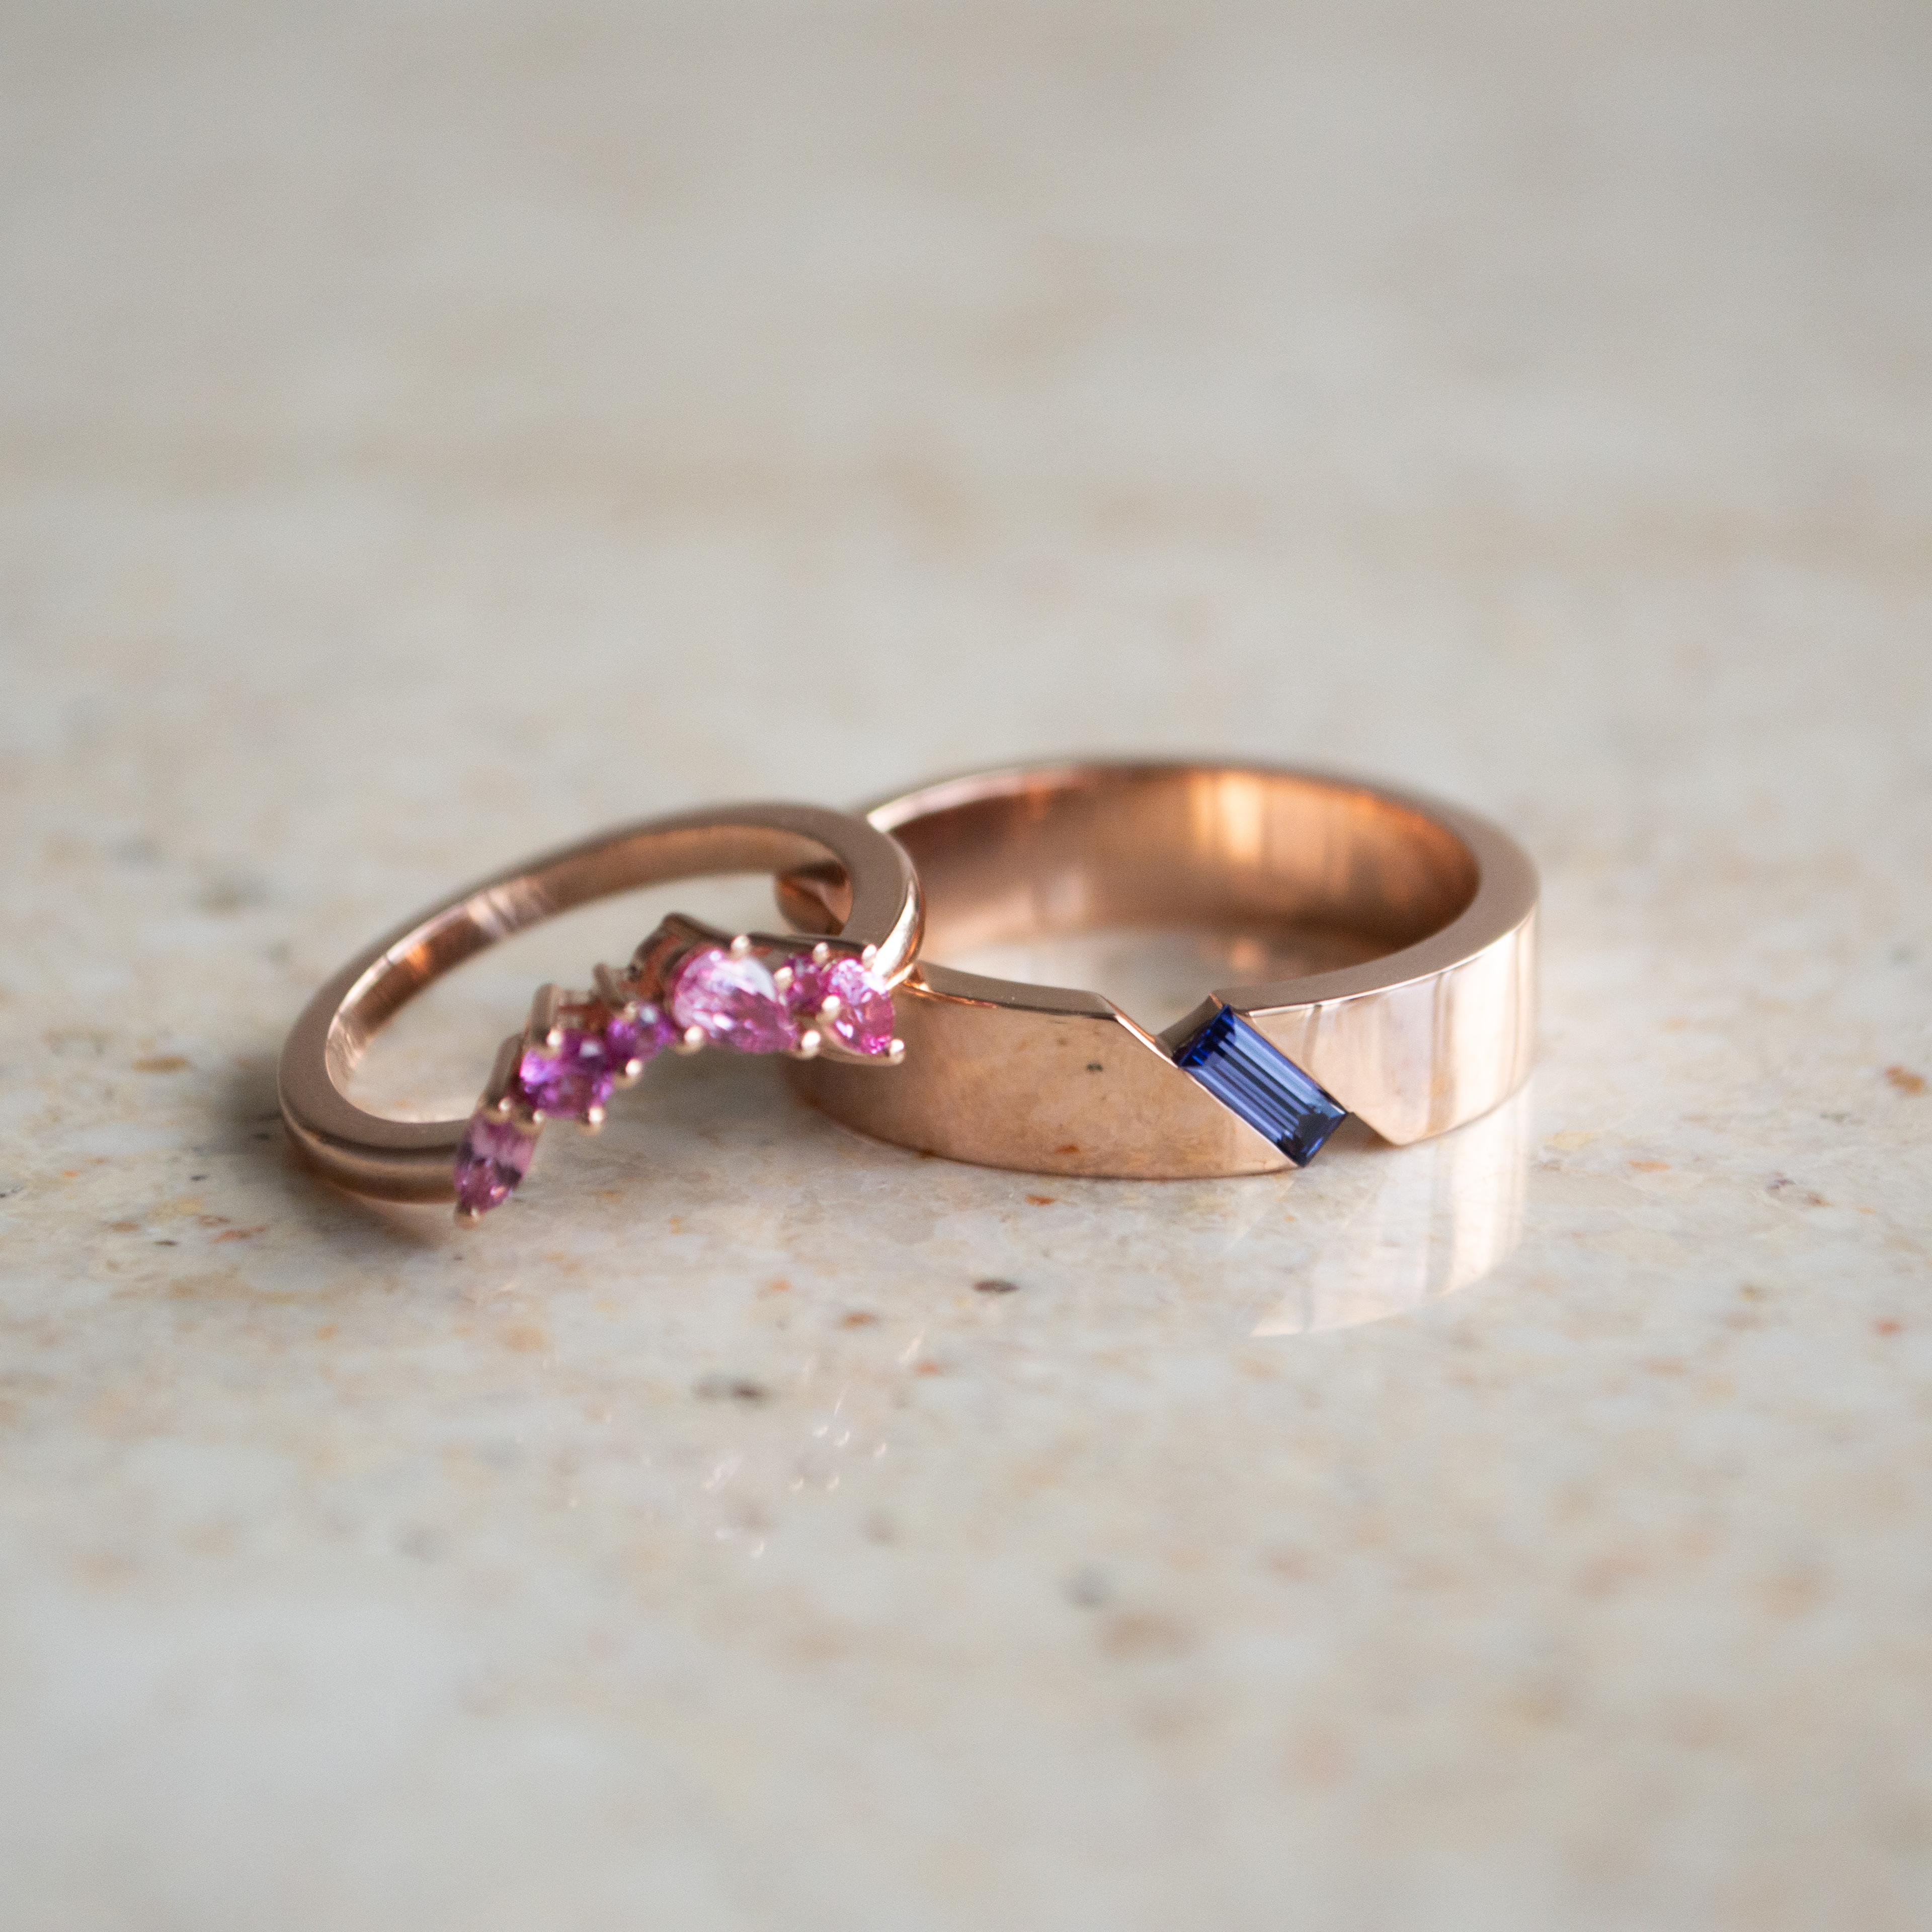 Cheap Wedding Rings NZ: What Not To Do Thumbnail